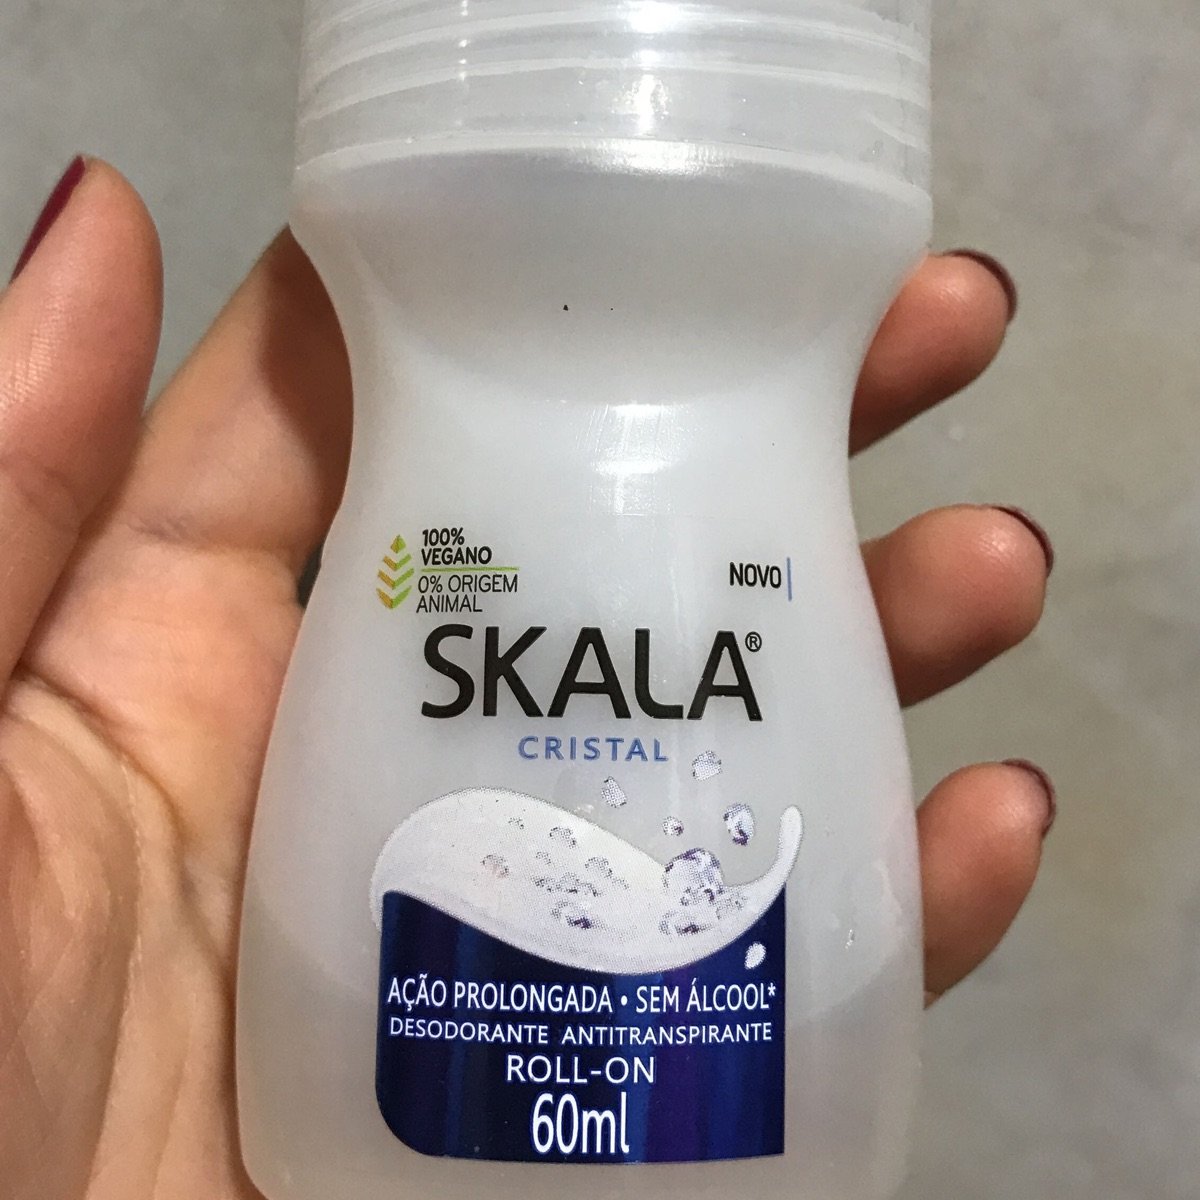 Skala Desodorante Skala Cristal Review | abillion